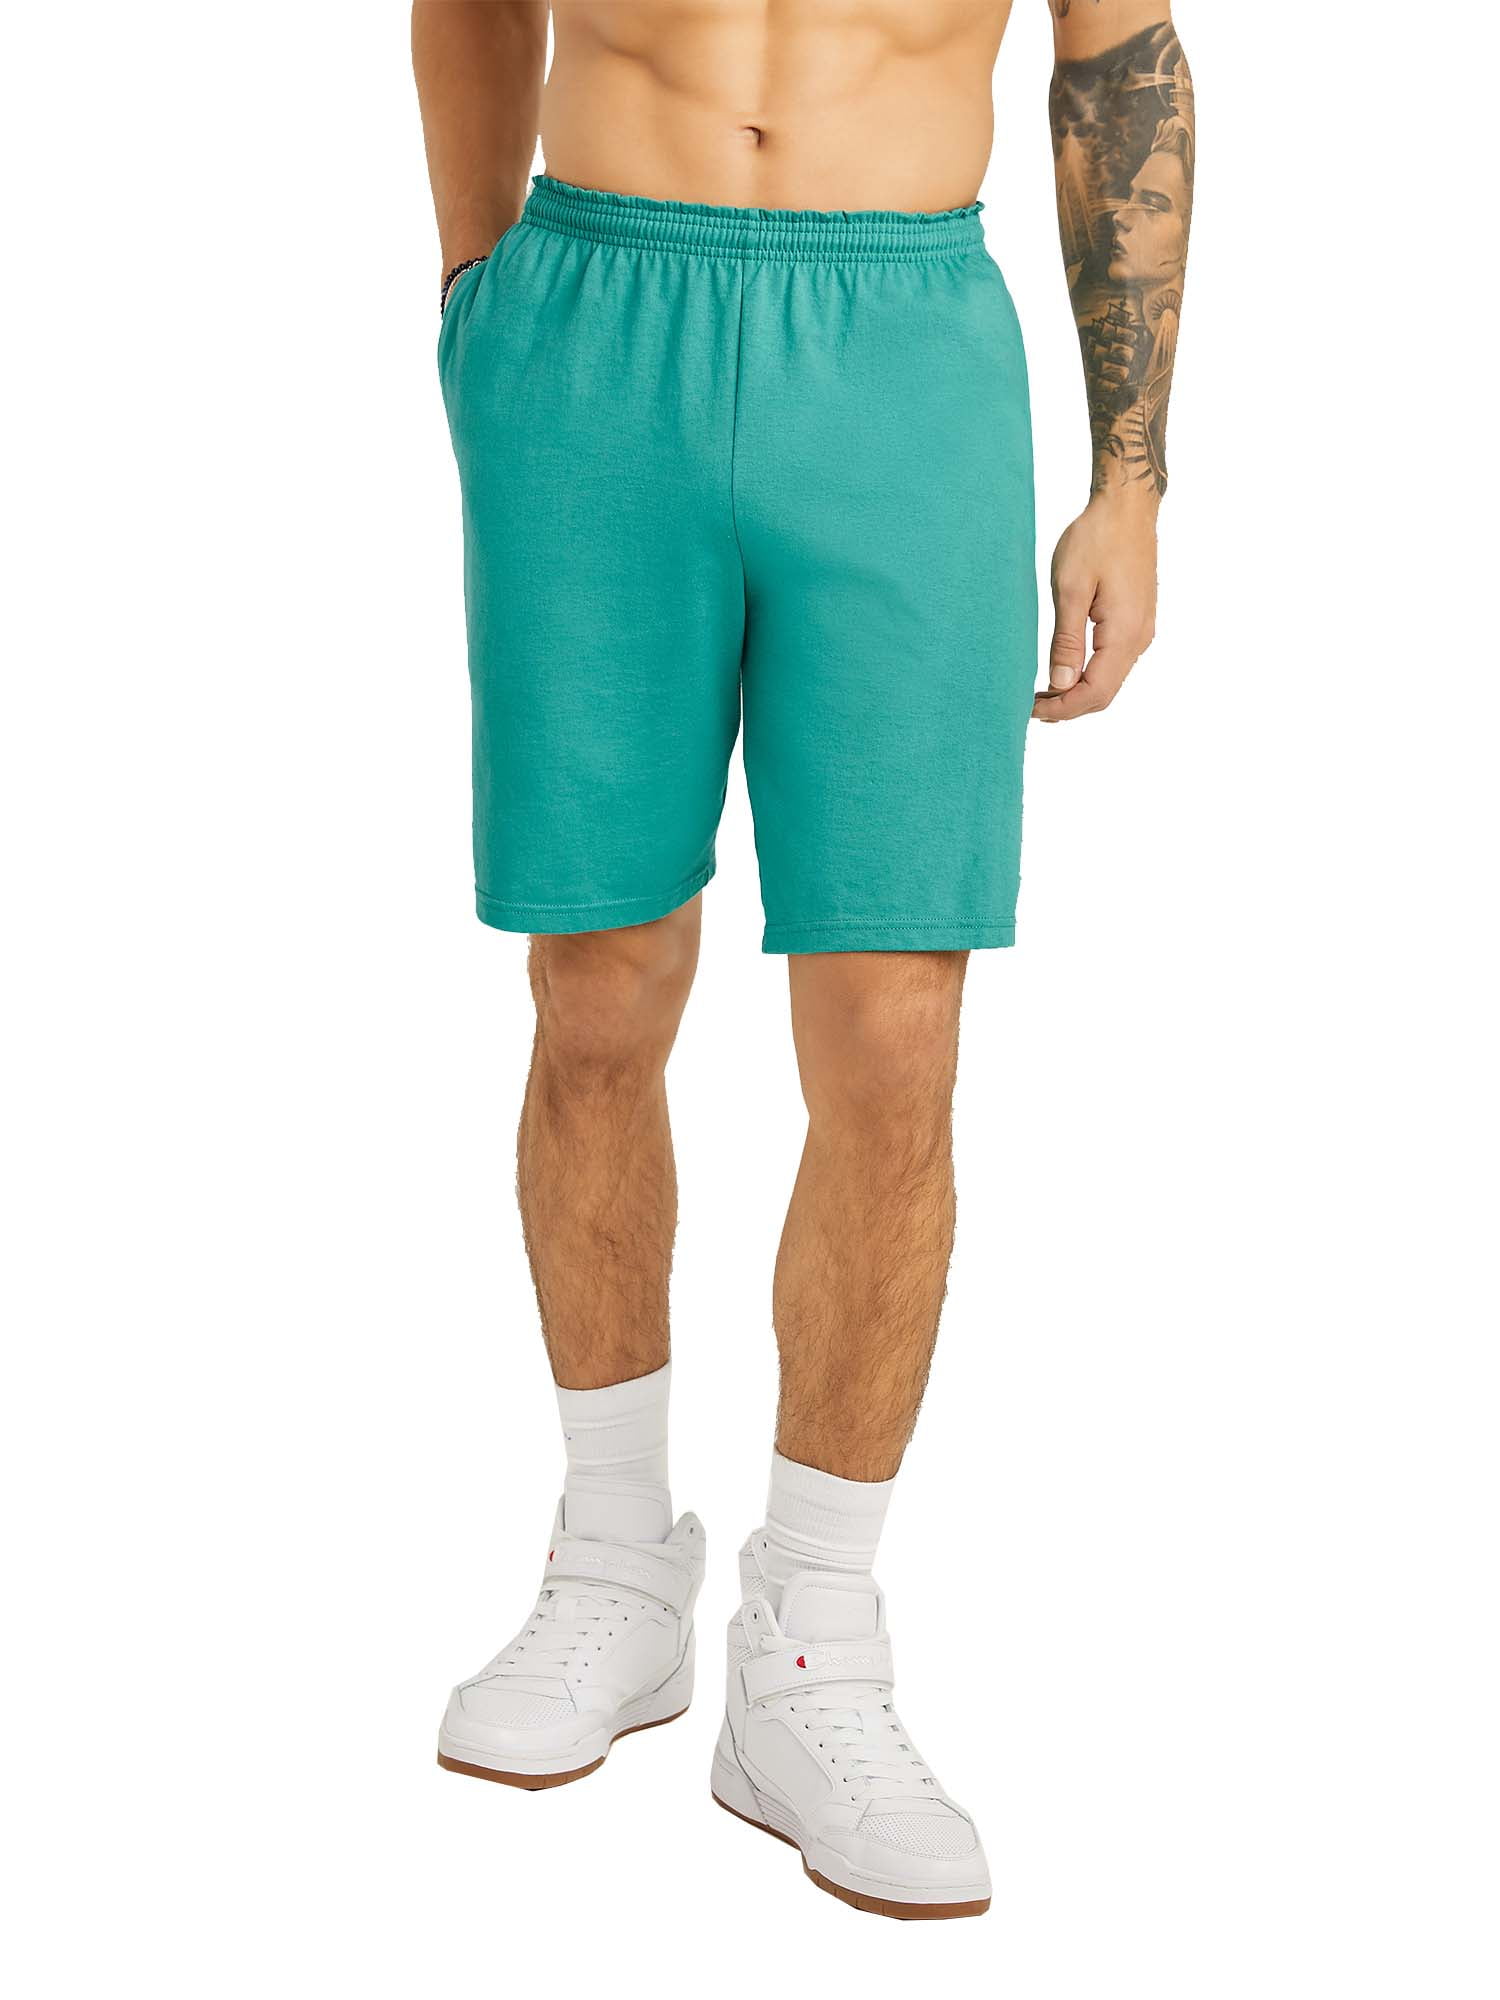 Champion Men's Authentic Cotton 9" Shorts with Pockets, up Size 4XL - Walmart.com